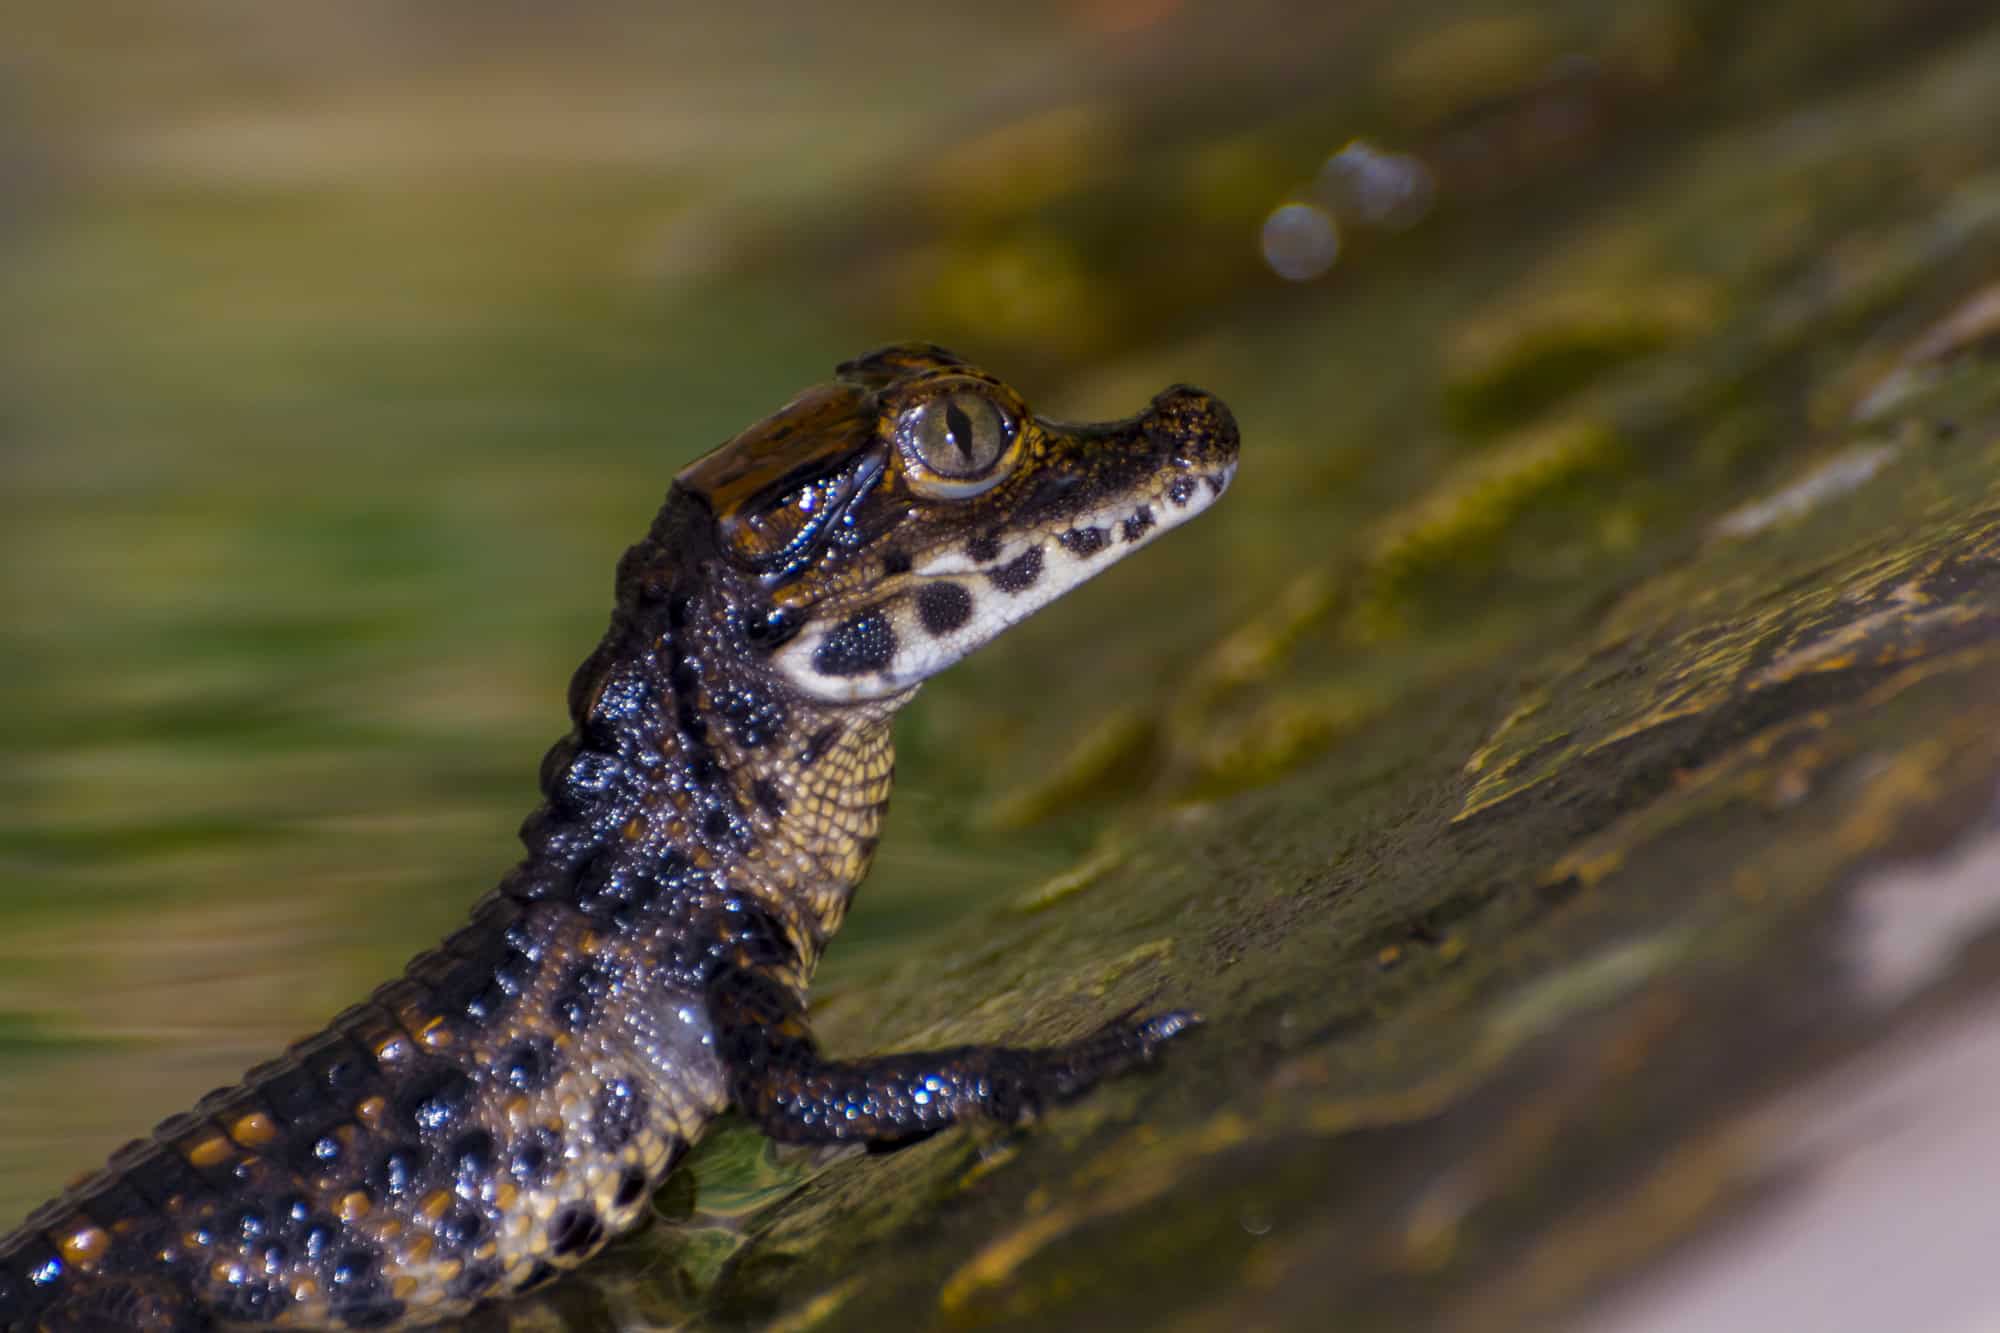 Young alligator. I